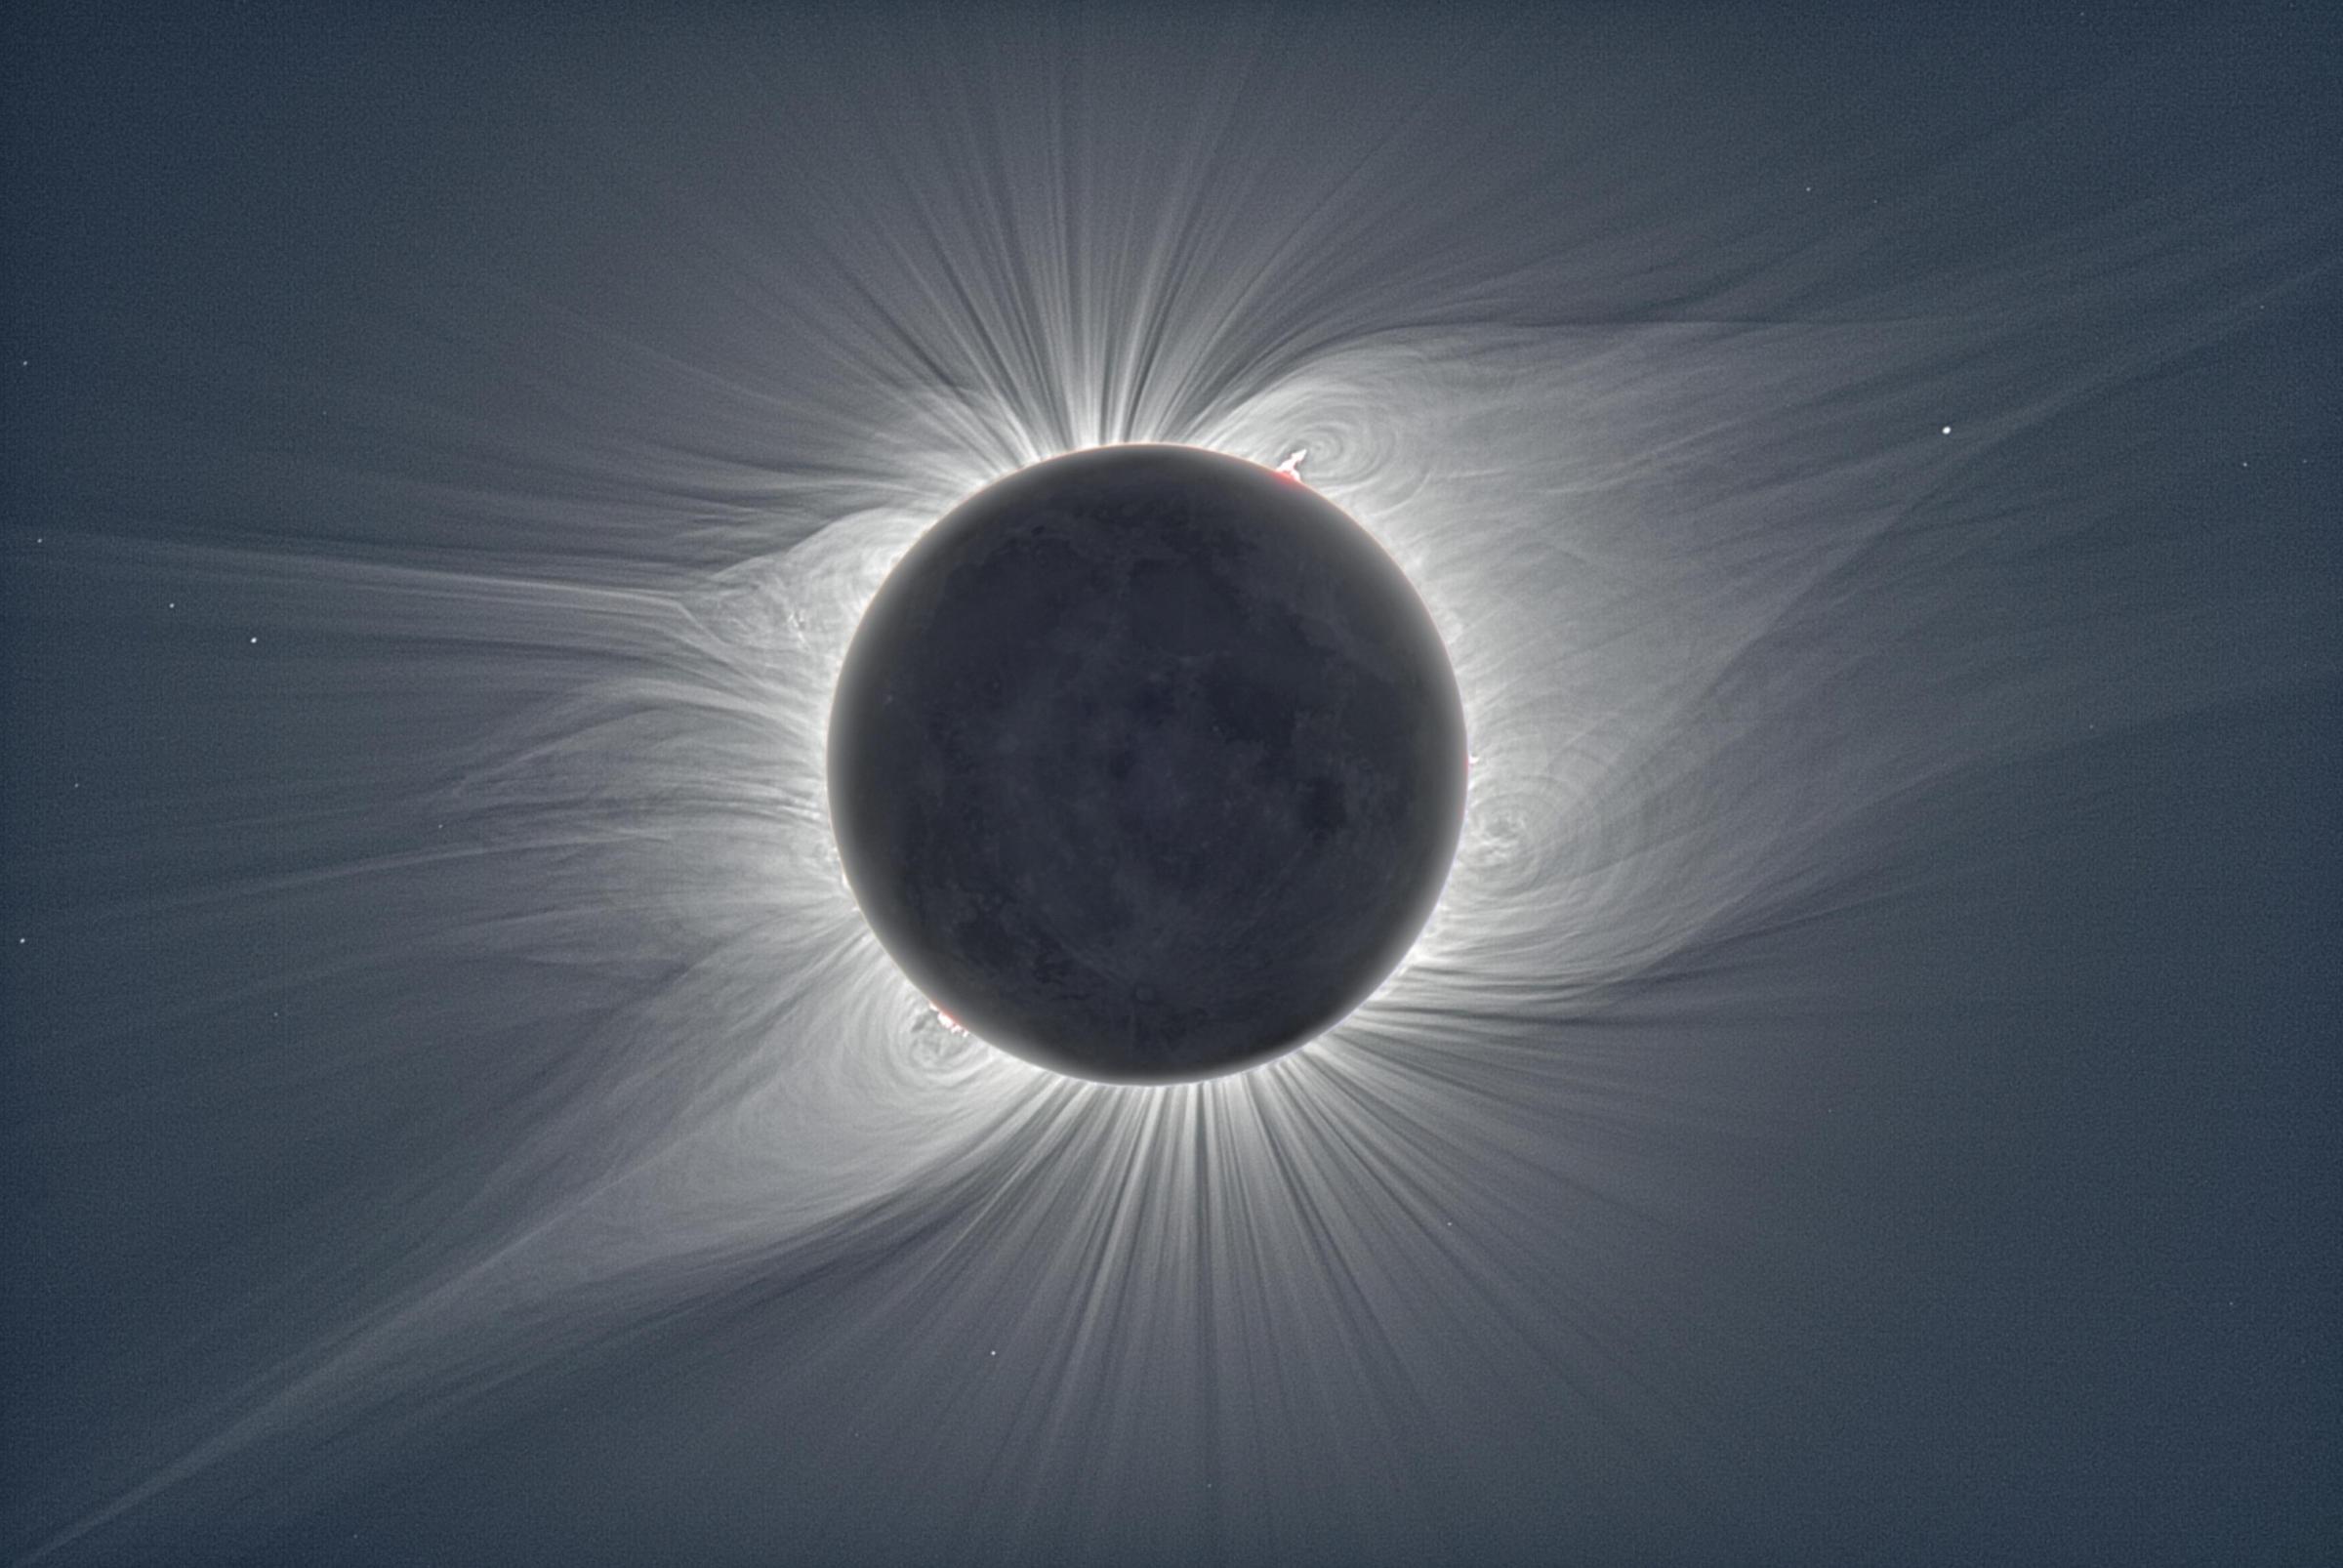 Eclipse Photographer Milloslav Druckmuller